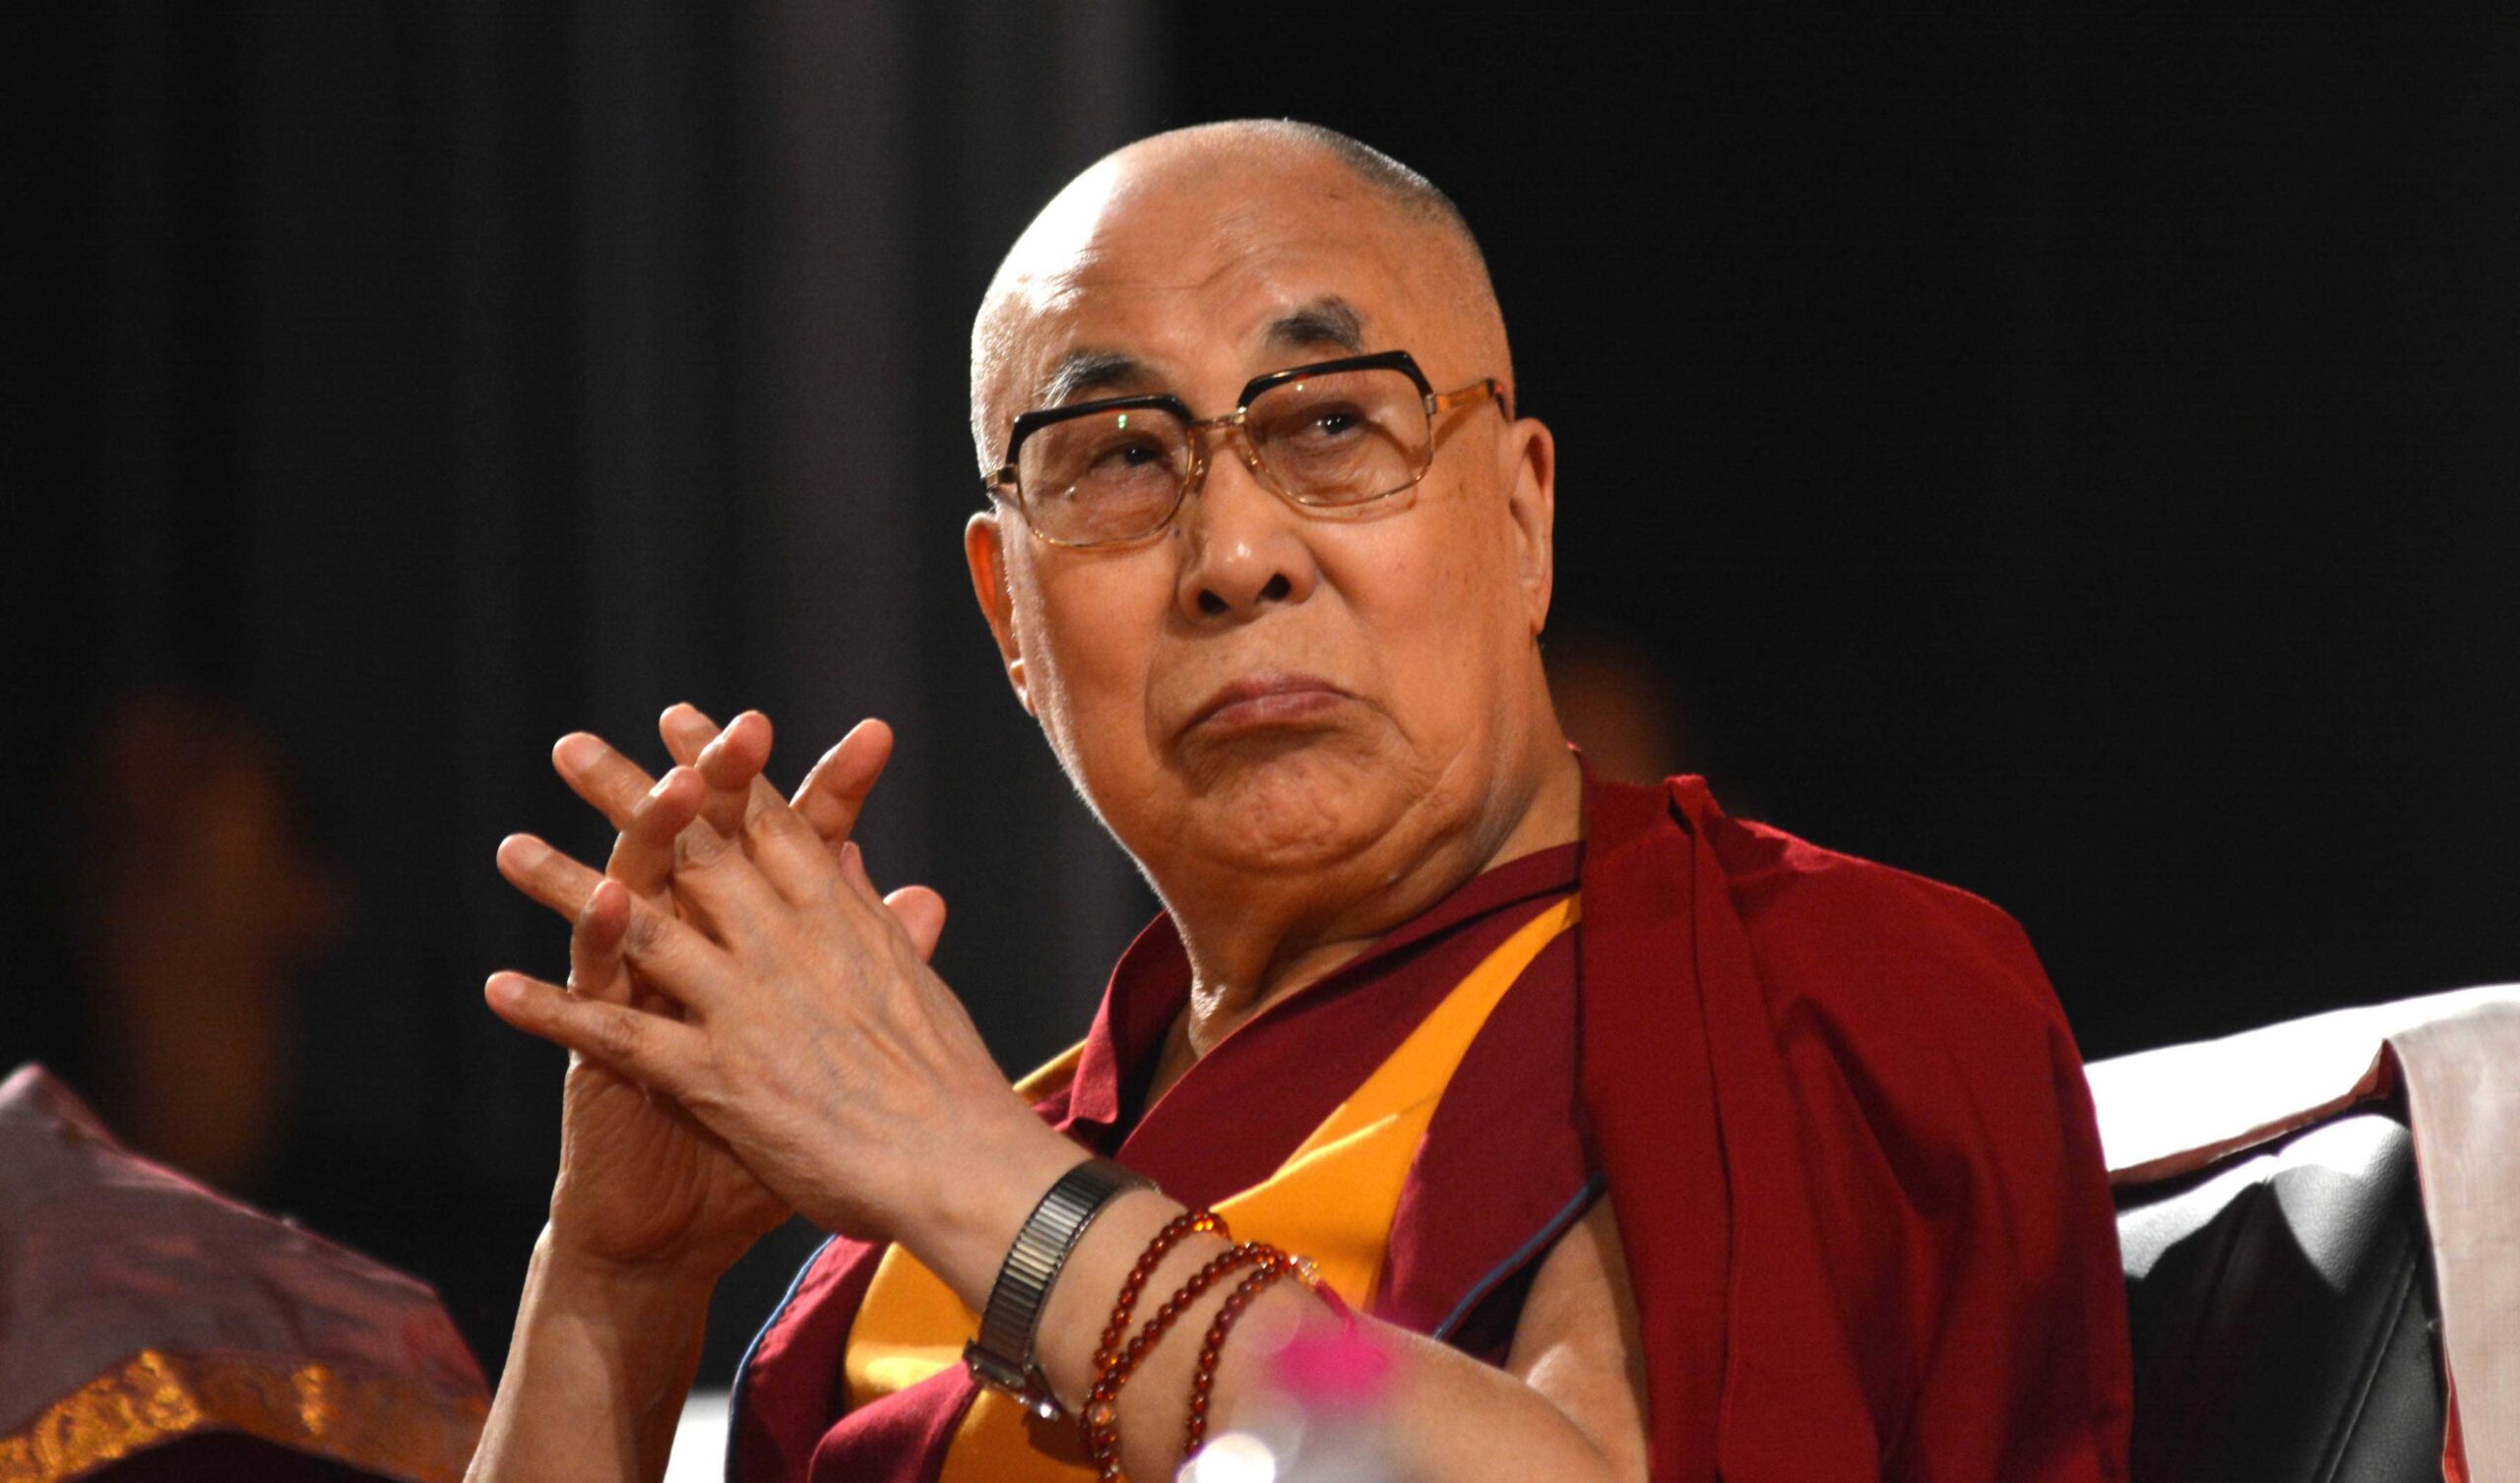  Dalai Lama marks 87th birthday by opening library